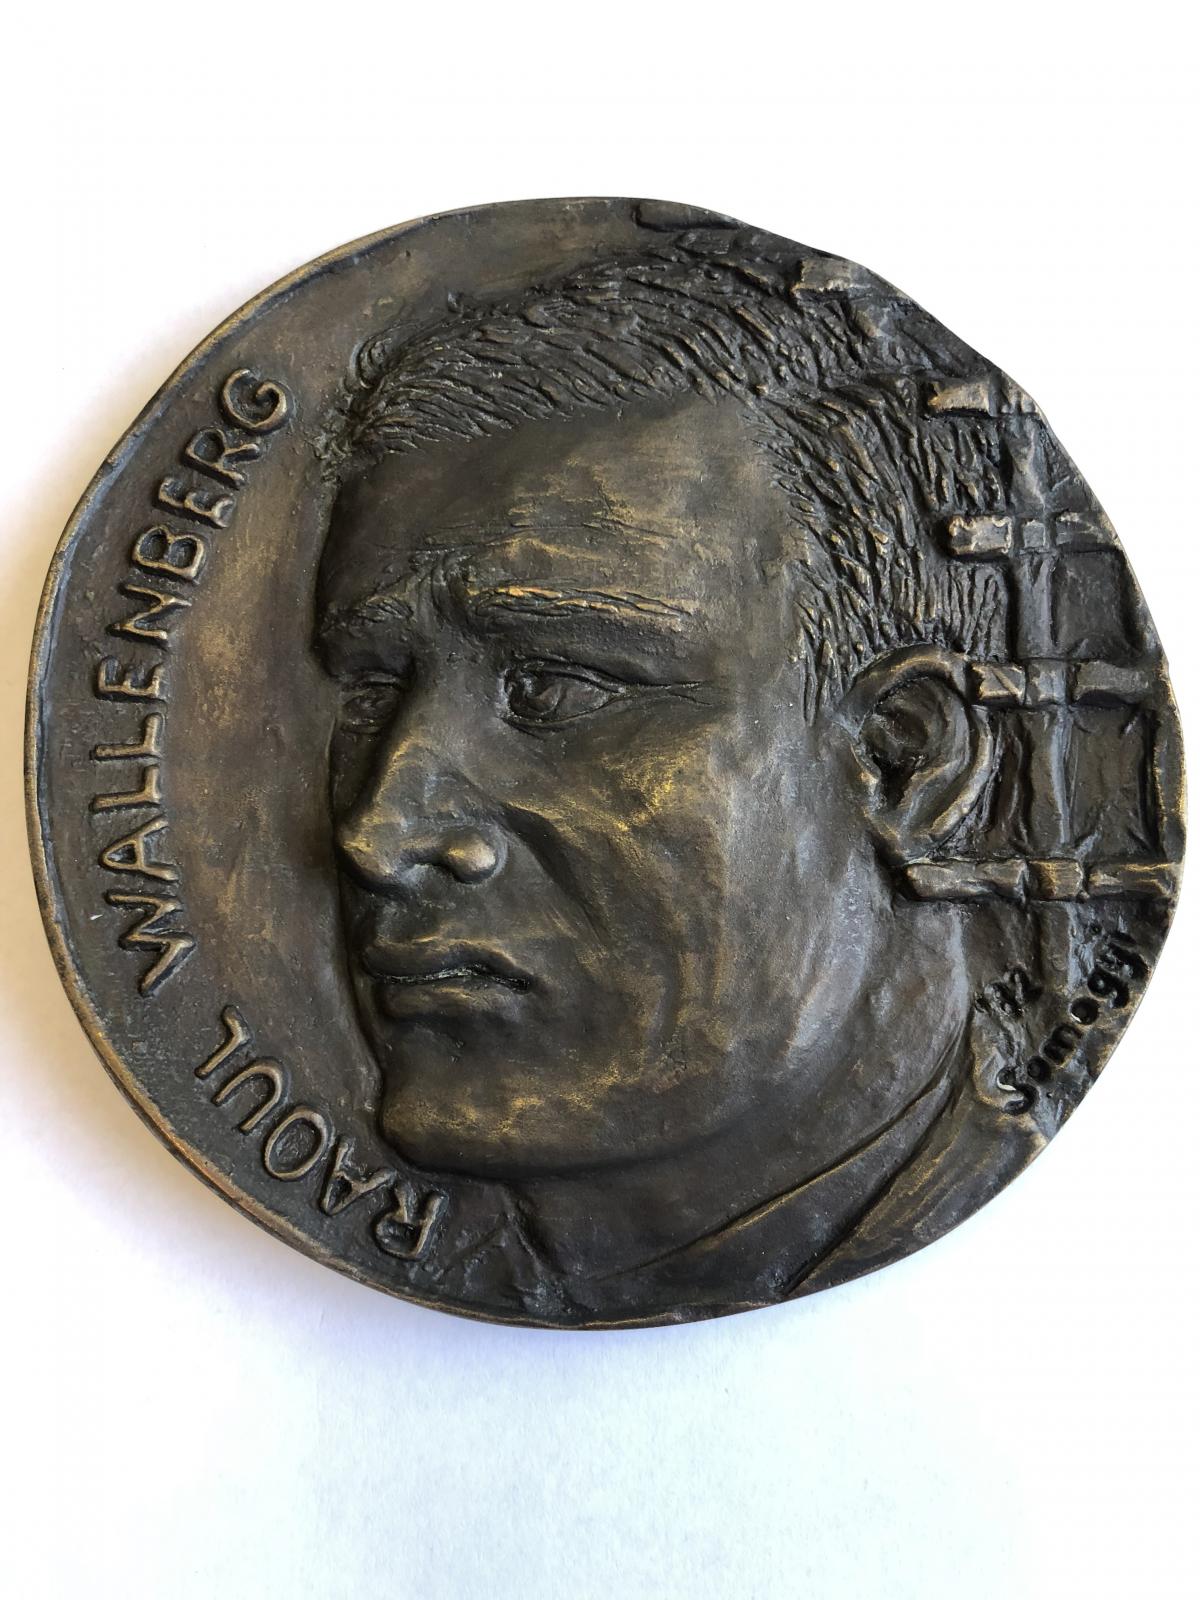 Raoul Wallenberg Medal